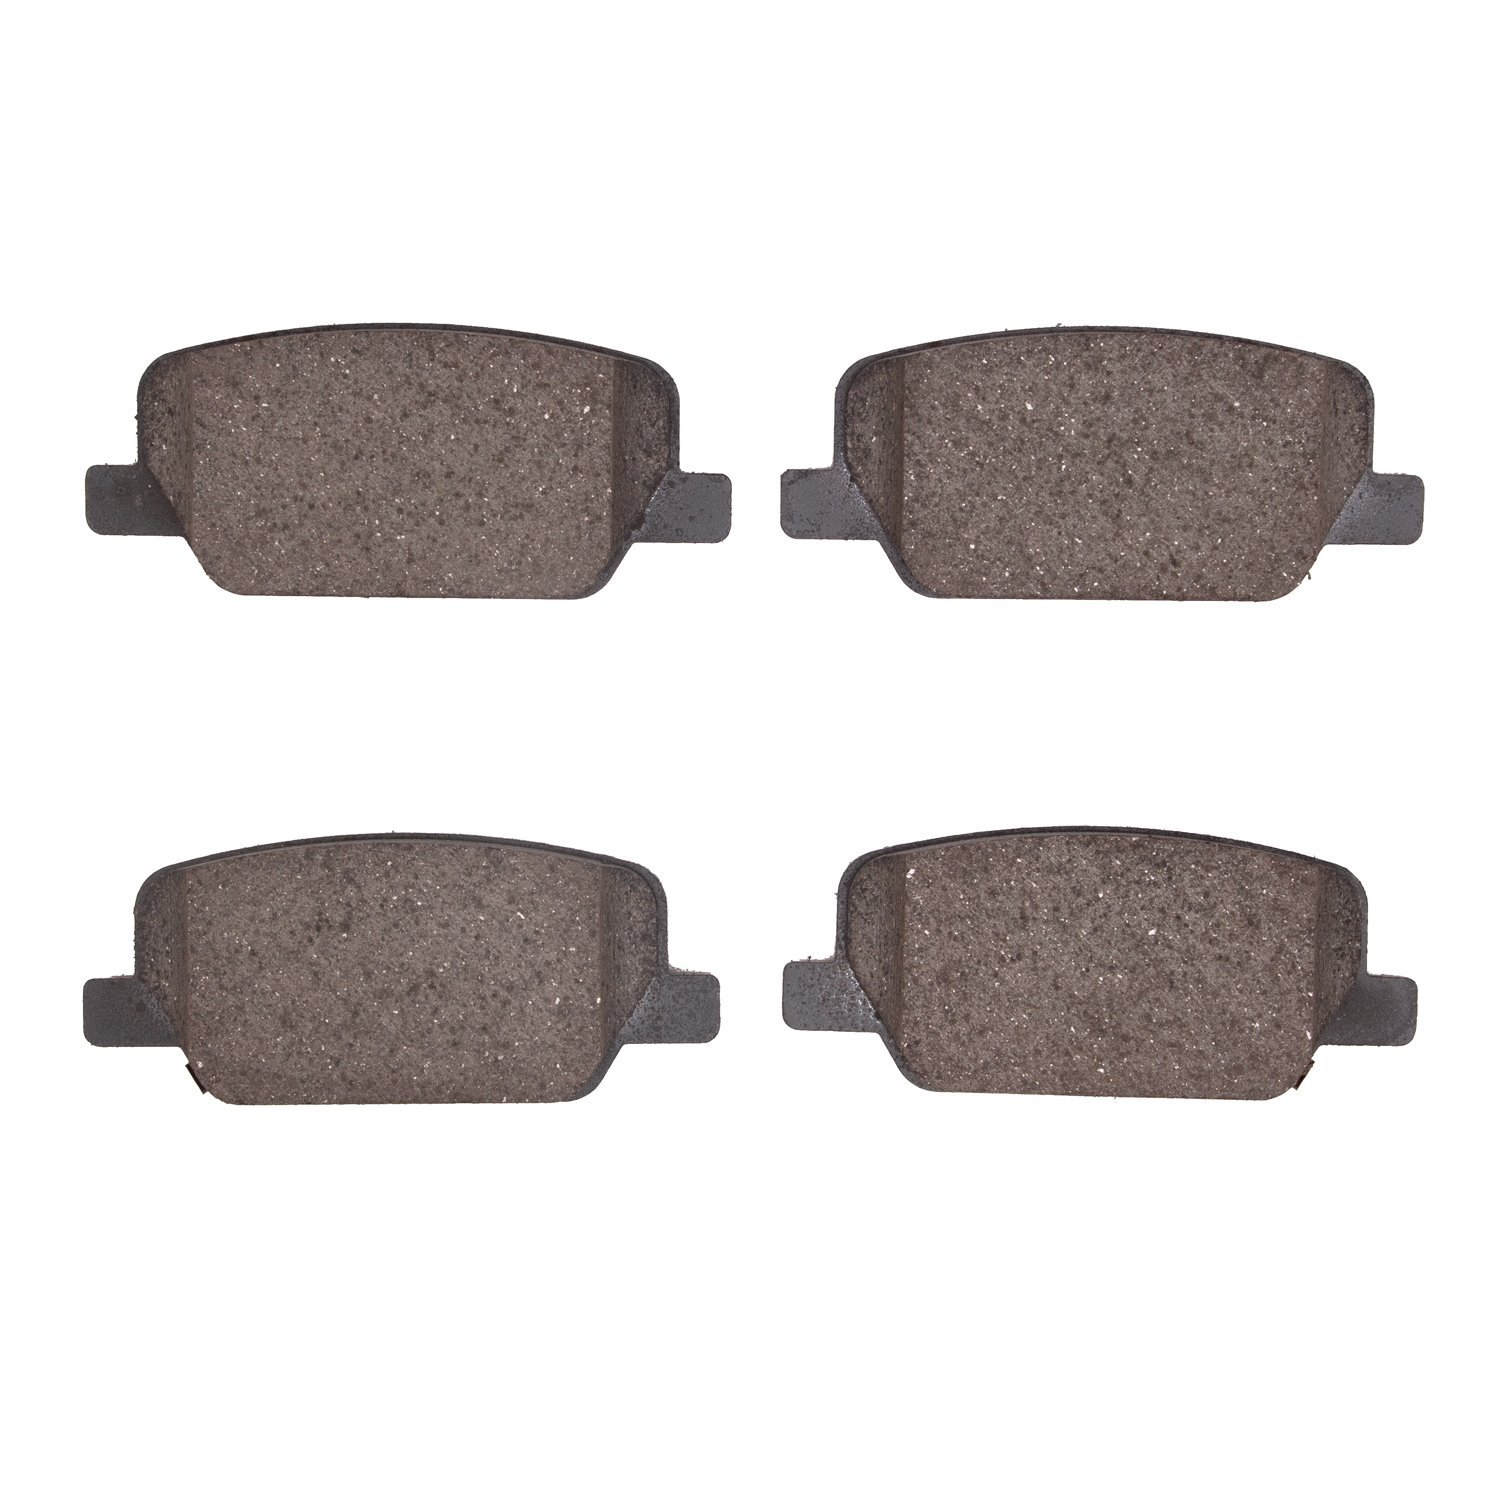 1551-2199-00 5000 Advanced Ceramic Brake Pads, Fits Select Kia/Hyundai/Genesis, Position: Rear